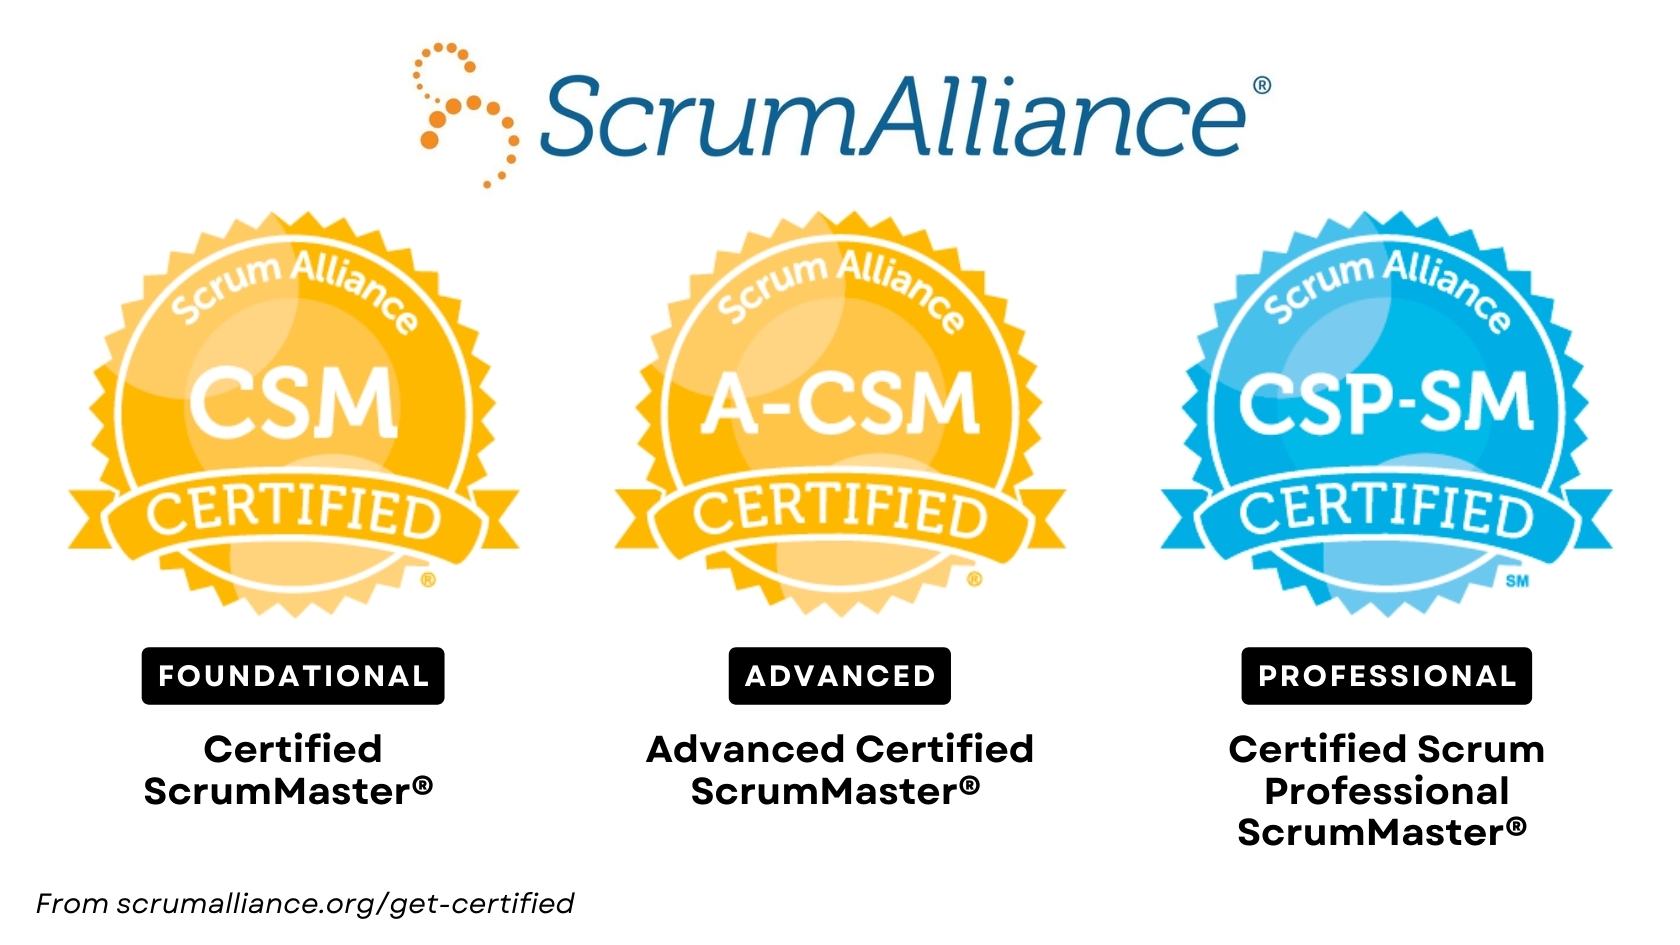 Scrum Alliance Certified ScrumMaster (CSM), Advanced Certified ScrumMaster (A-CSM), and Certified Scrum Professional ScrumMaster (CSP-SM) certifications overview.